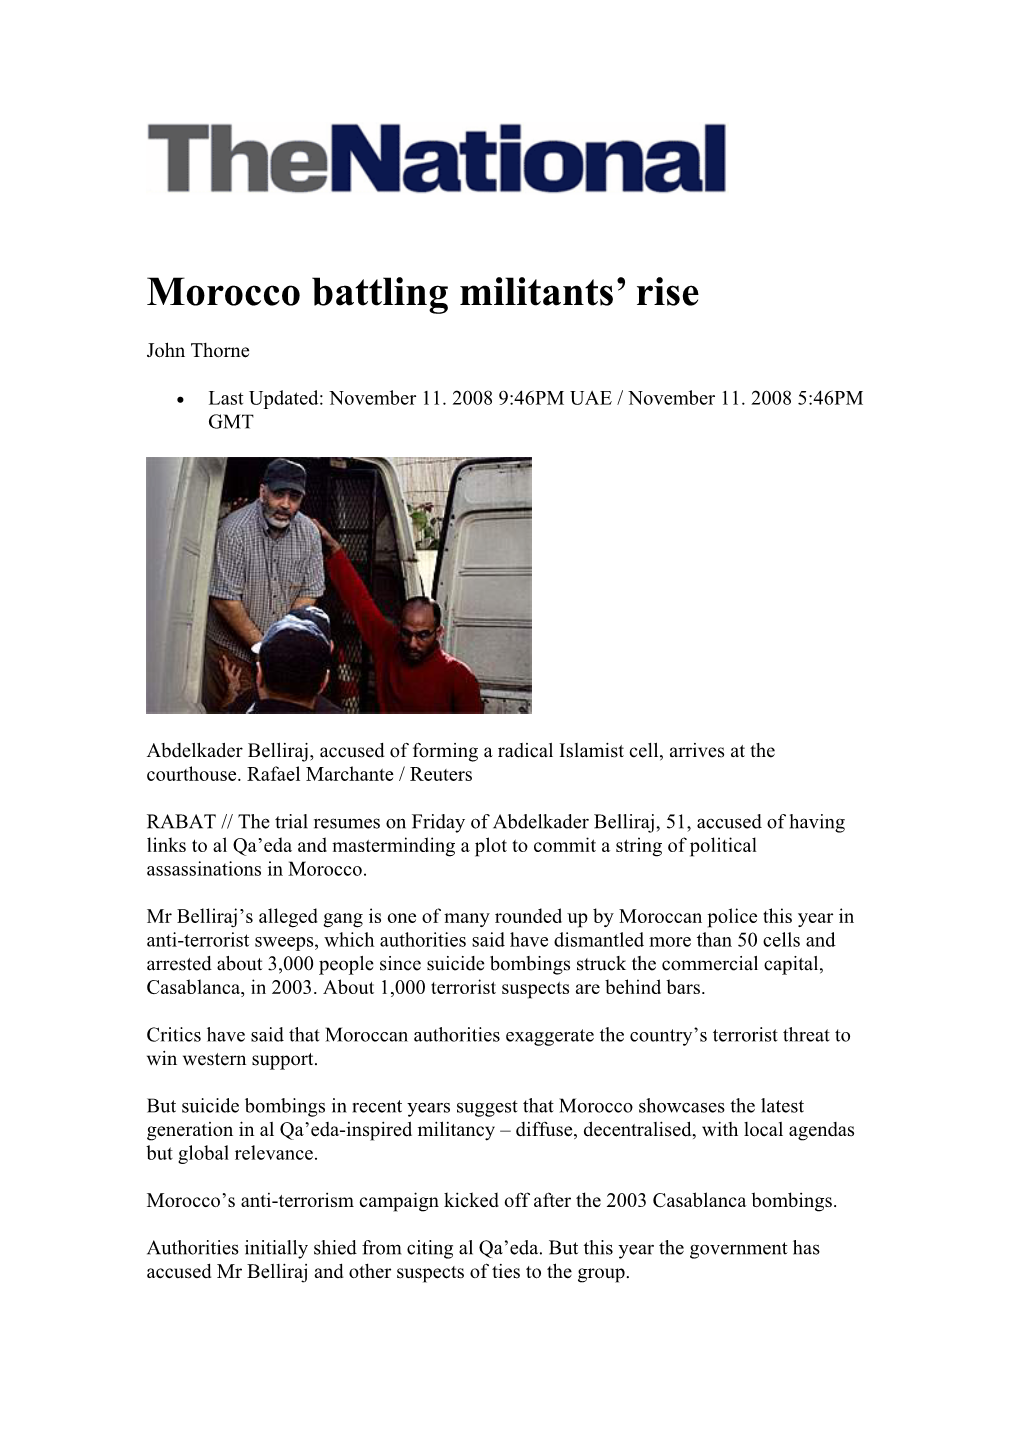 Morocco Battling Militants' Rise